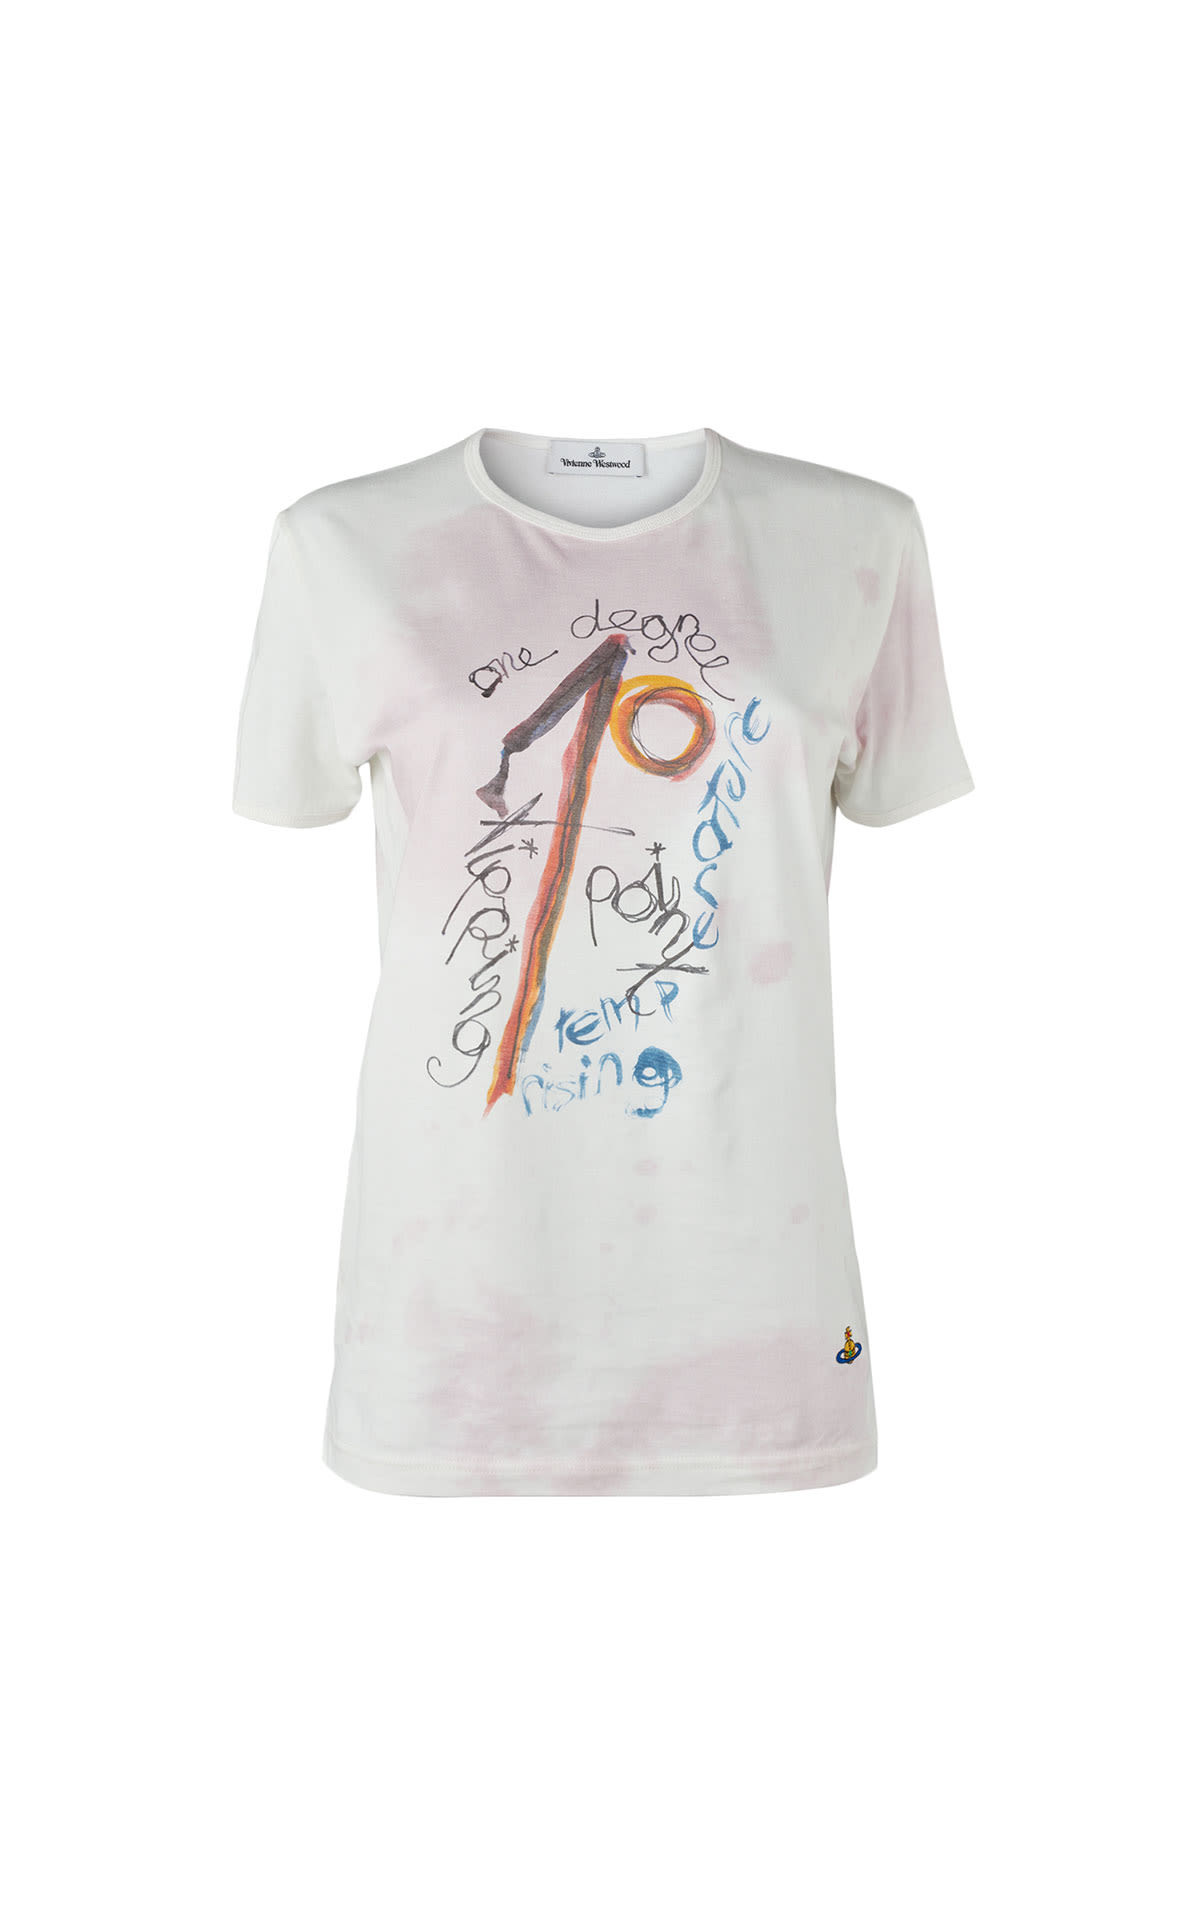 Vivienne Westwood One degree t-shirt unisex from Bicester Village